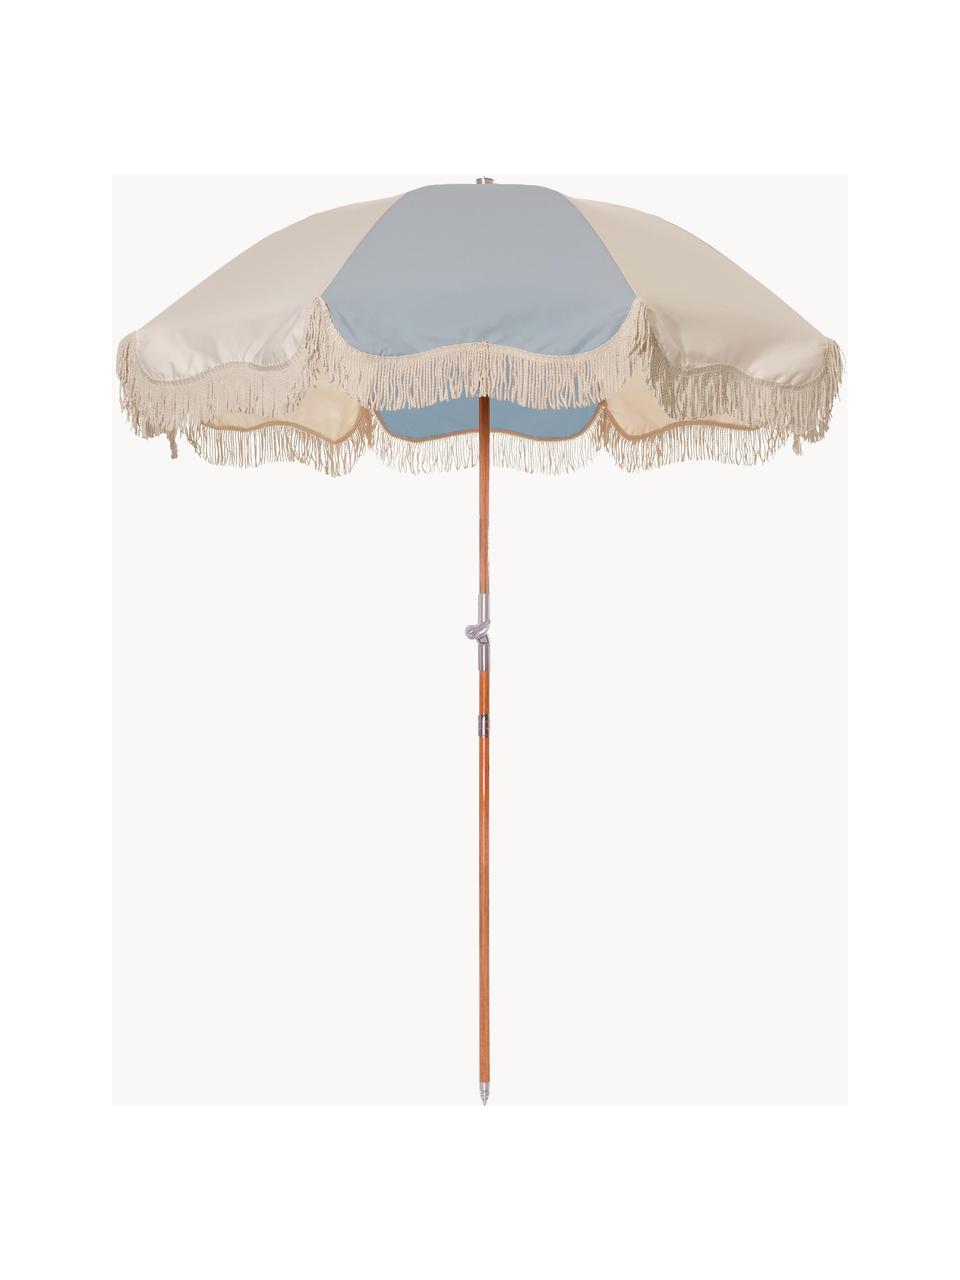 Sombrilla con flecos flexible Retro, Estructura: madera laminada, Flecos: algodón, Azul claro, blanco crema, Ø 180 x Al 230 cm